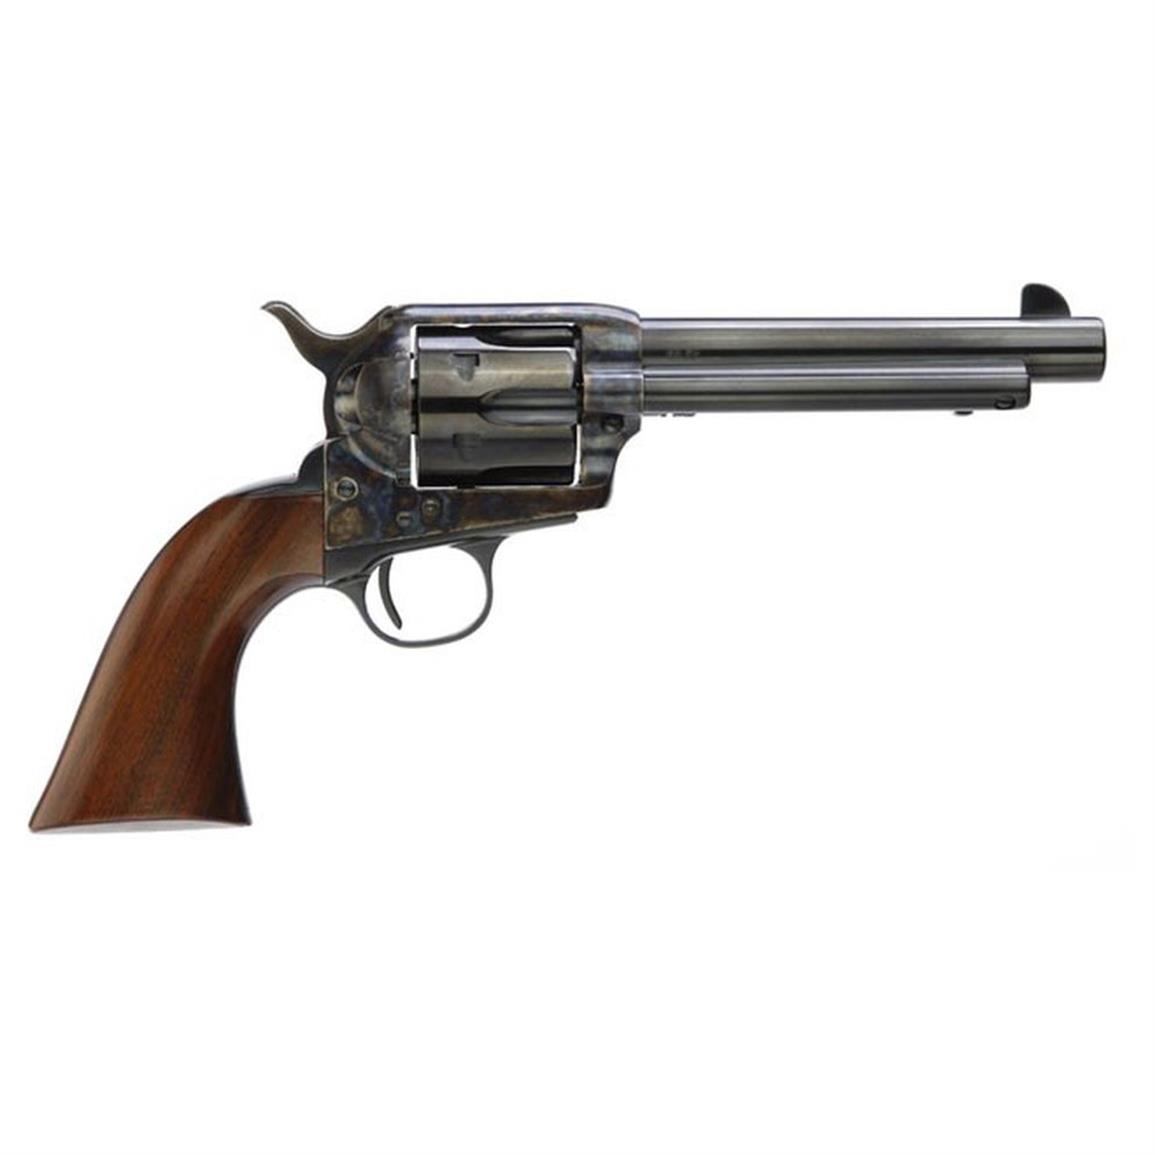 Taylor's & Co. Uberti 1873 Cattleman, Revolver, .357 Magnum, 5.5" Barrel, 6 Rounds